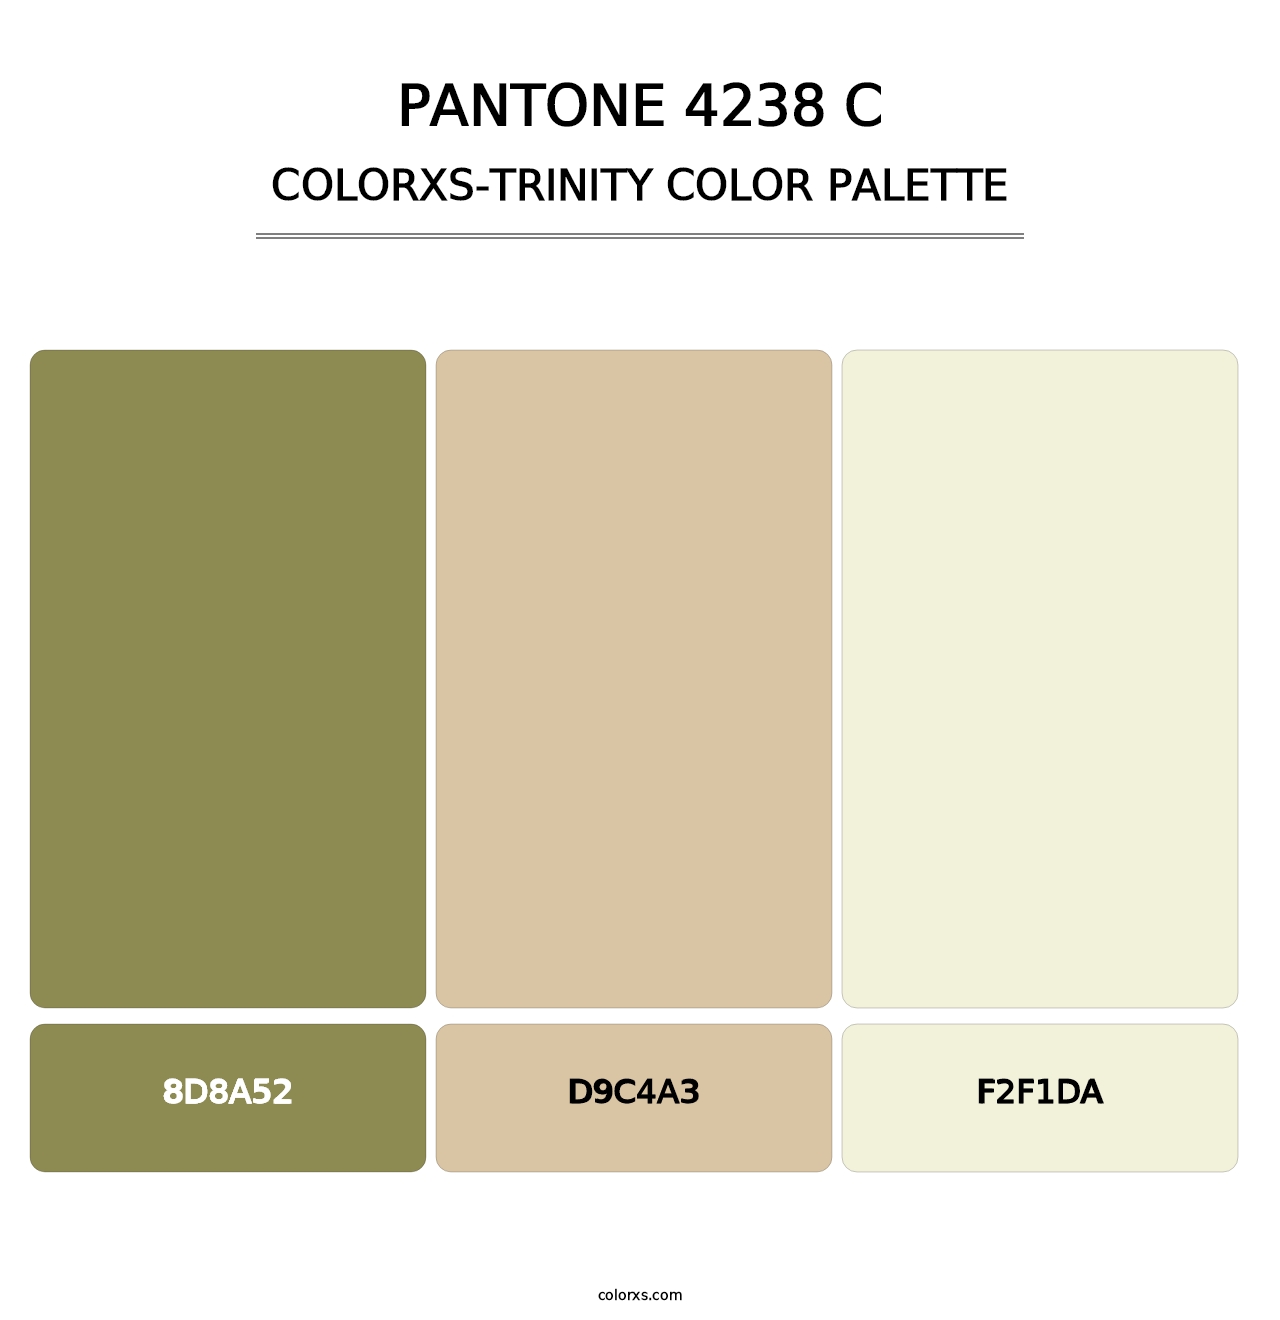 PANTONE 4238 C - Colorxs Trinity Palette